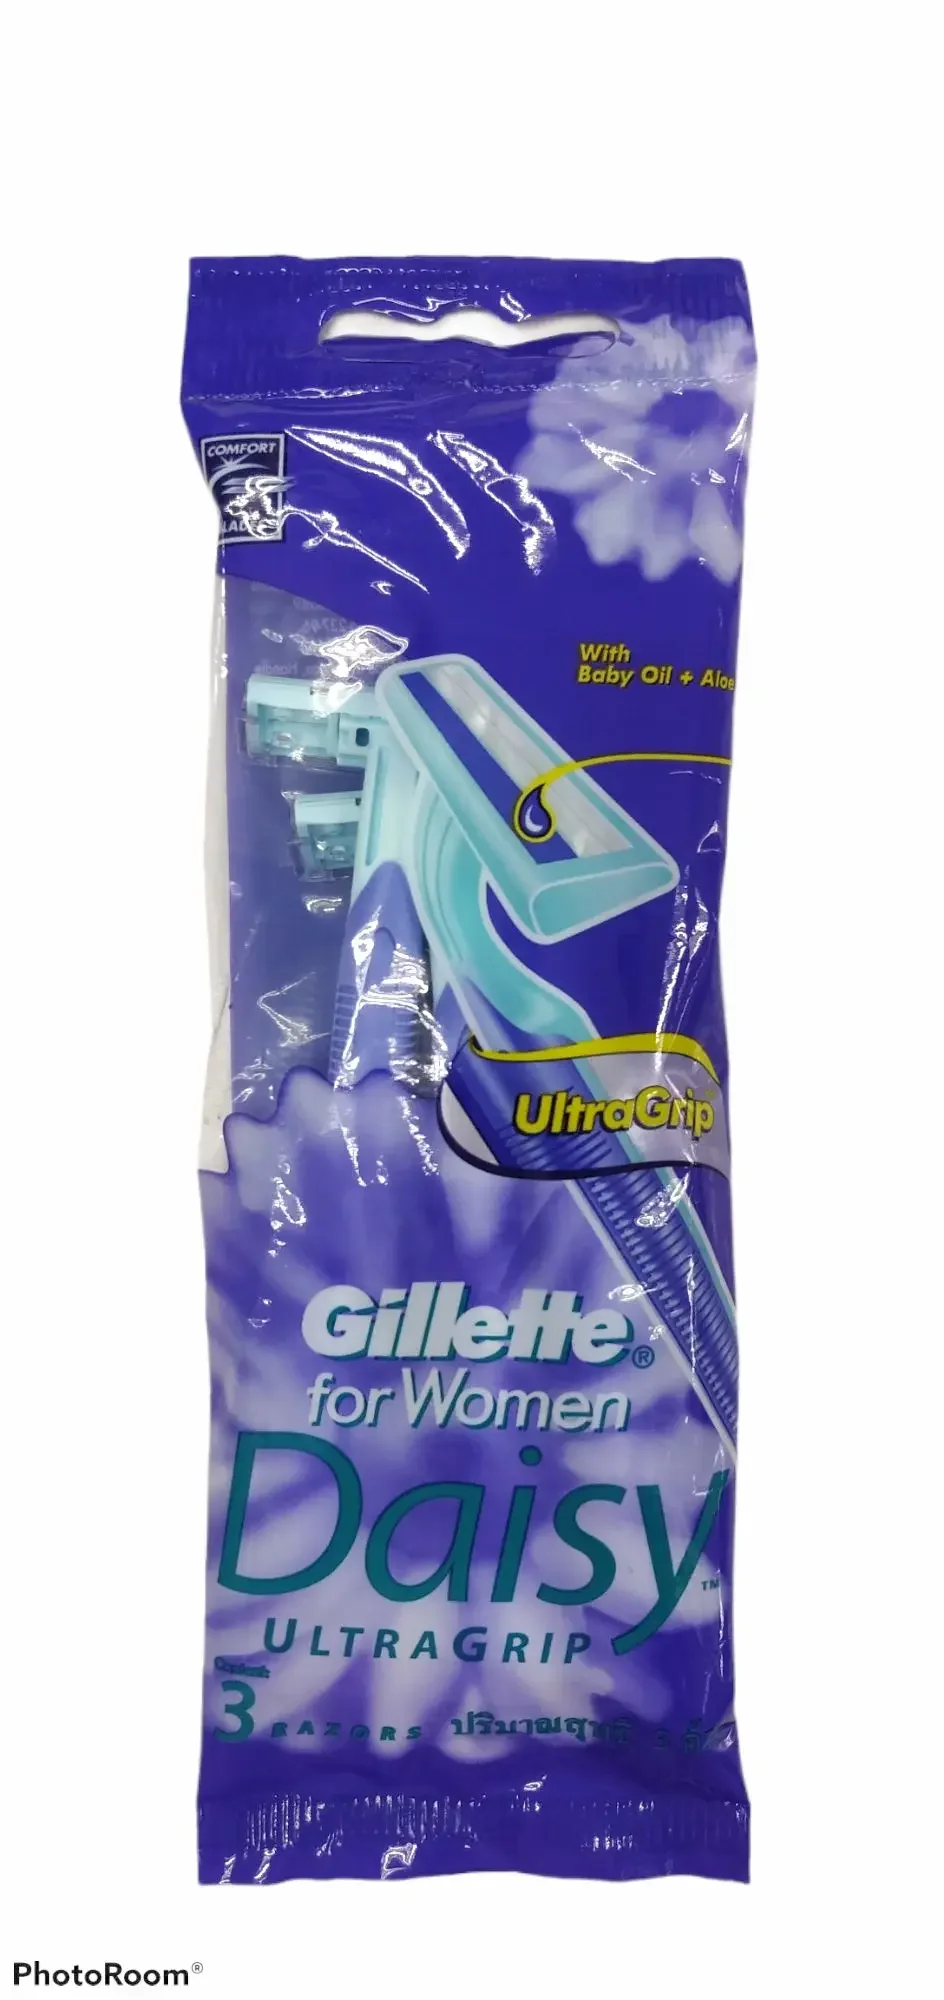 Gillette for Women Daisy Ultragrip 3 razors (With Baby oil + Aloe)